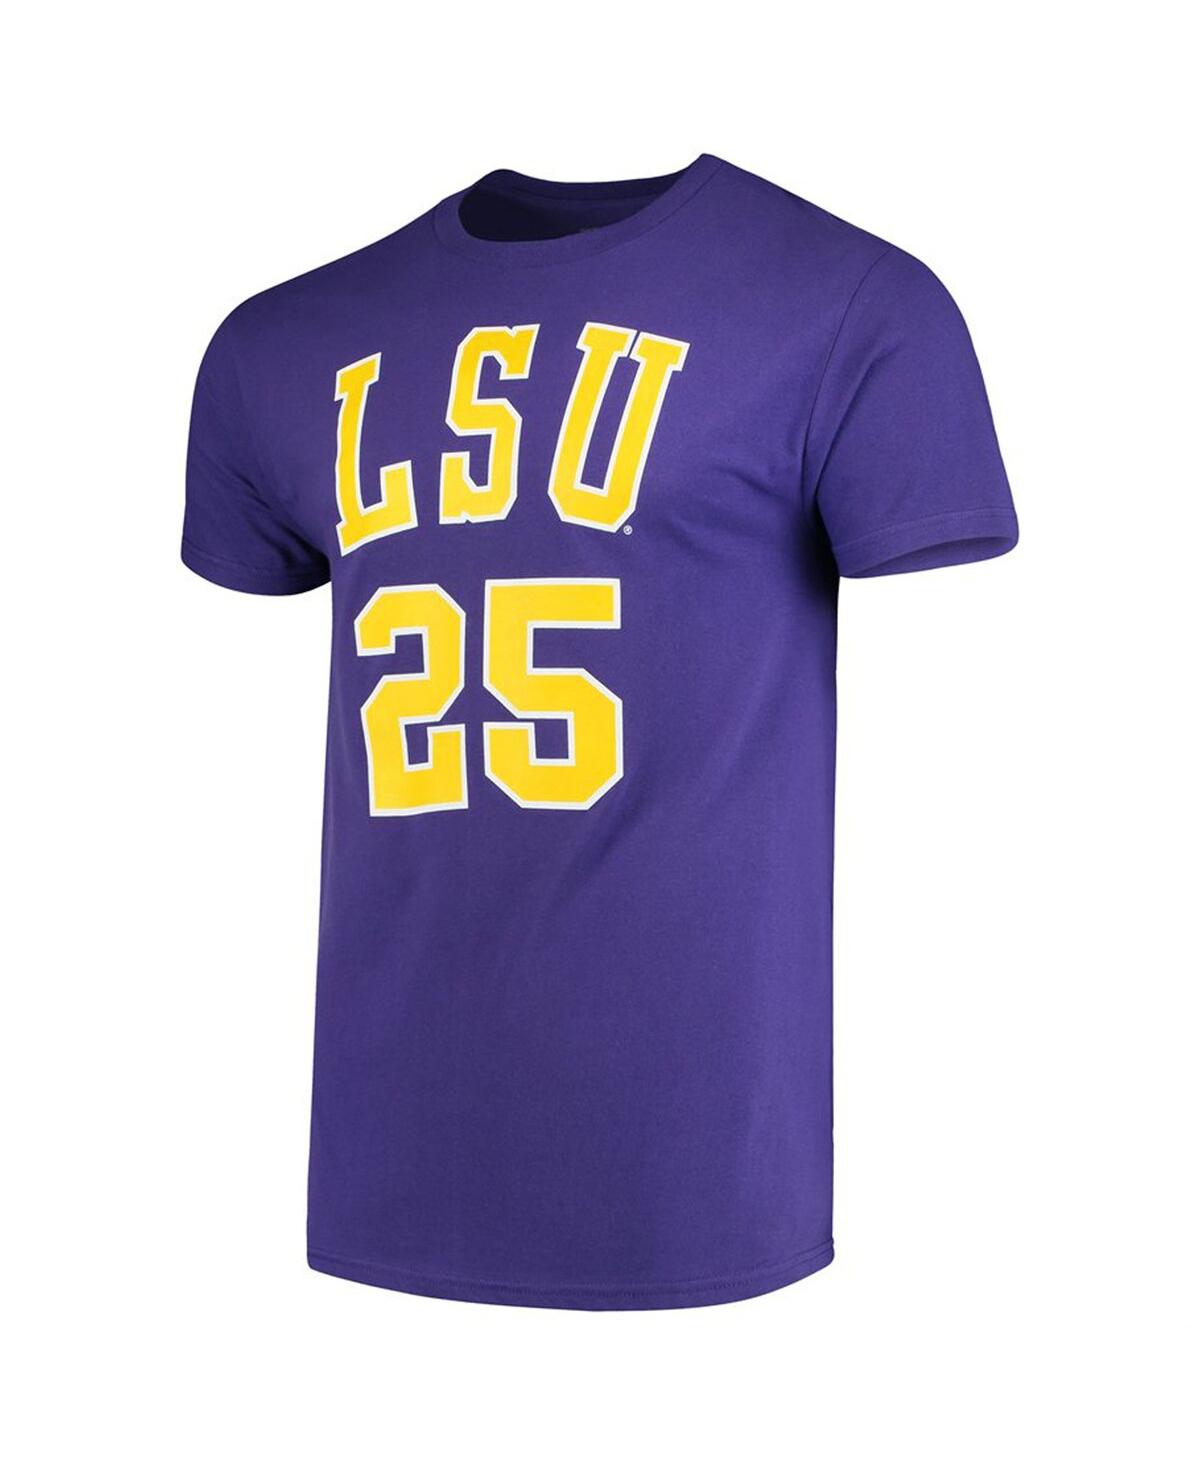 Shop Retro Brand Men's Original  Ben Simmons Purple Lsu Tigers Alumni Basketball Jersey T-shirt